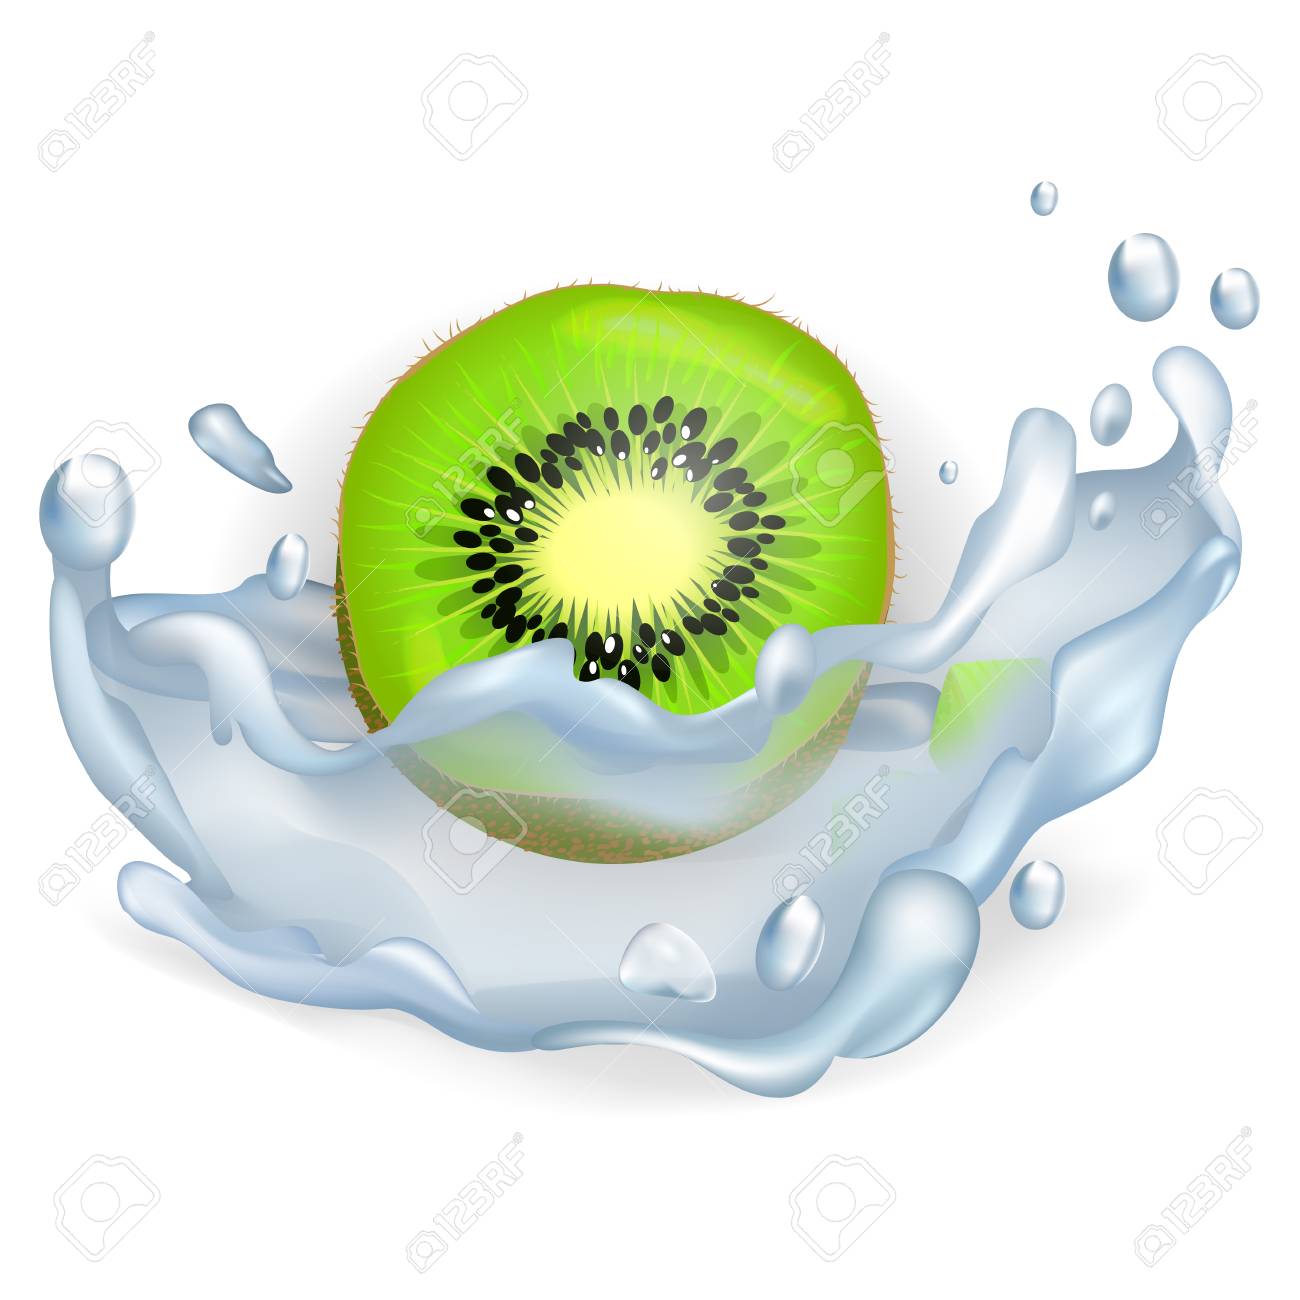 Green Slice of Kiwi Fruit in Water Splash Closeup Stock Vector - 87289147